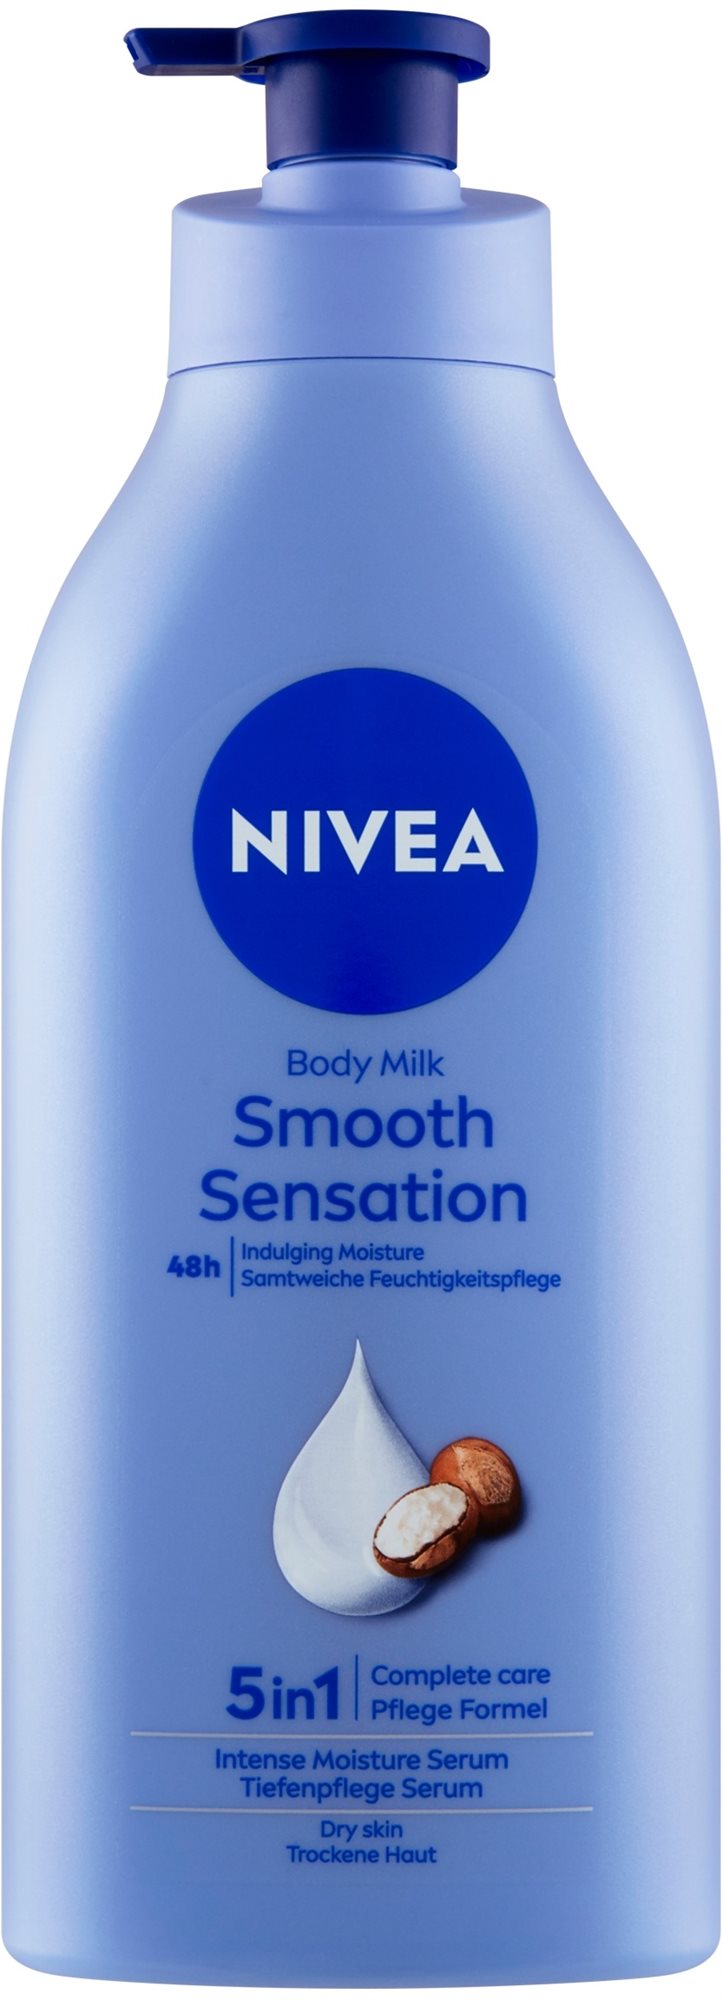 NIVEA Smooth Sensation Body Milk 625 ml